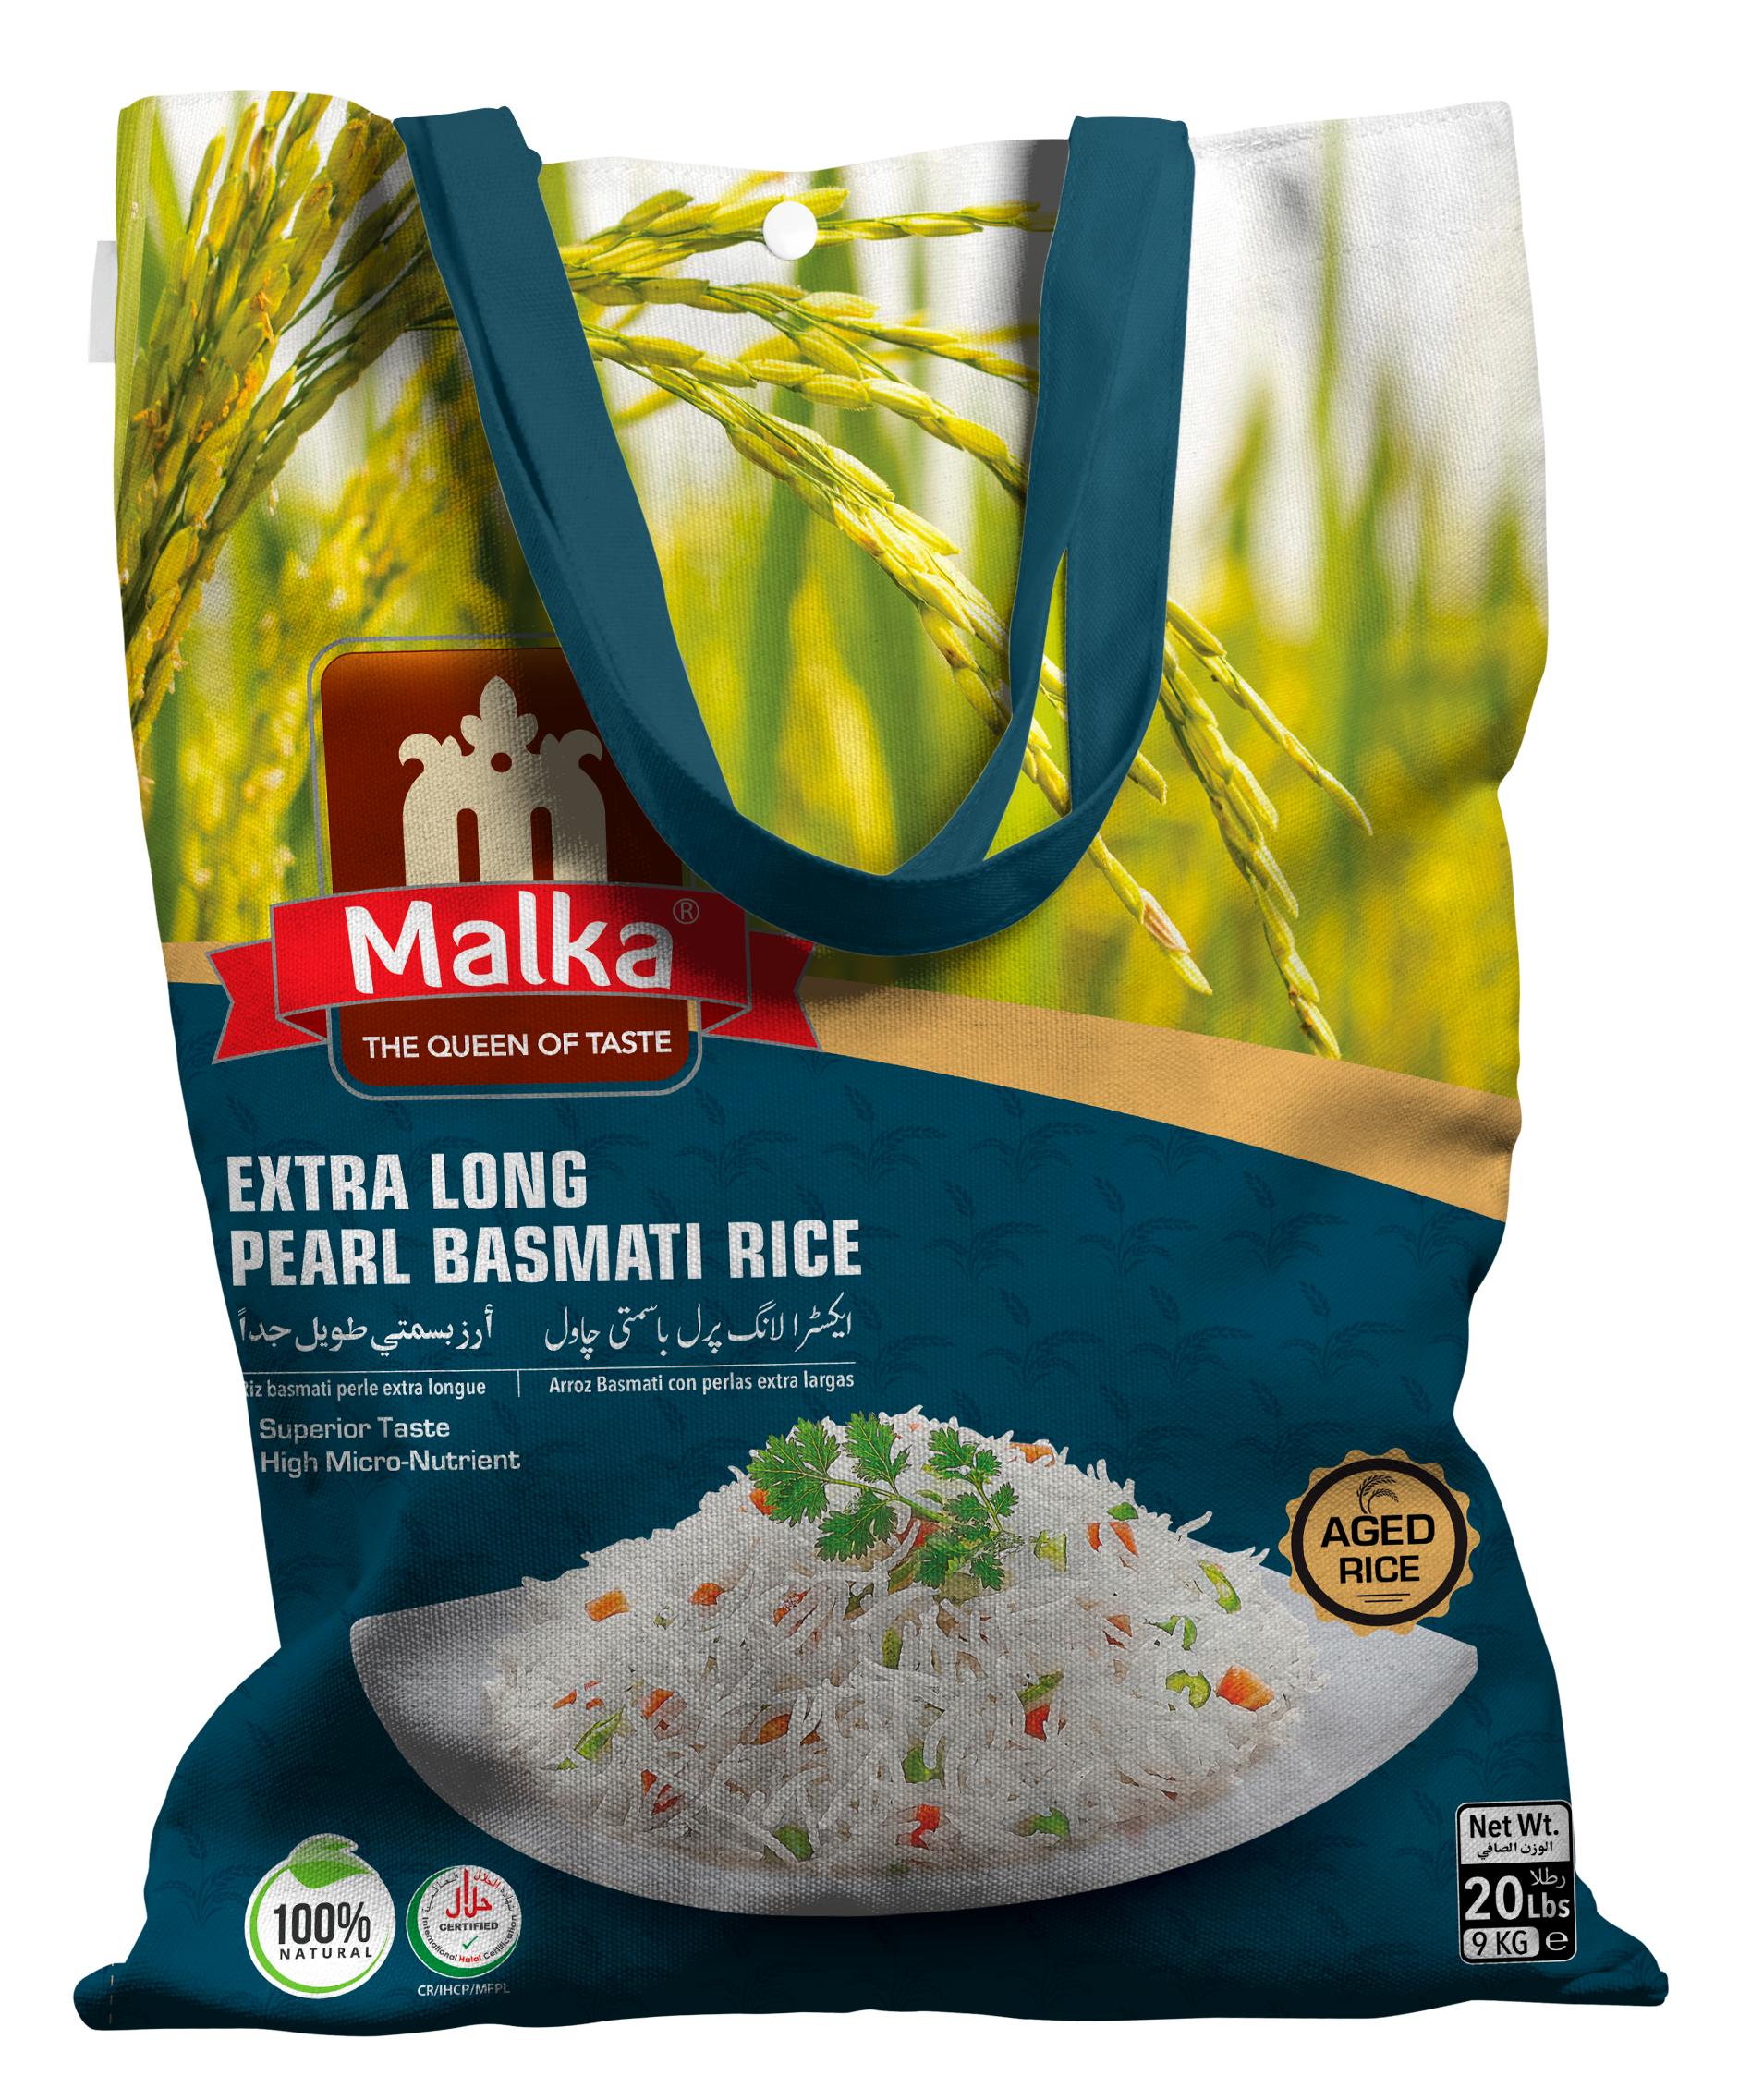 Extra Long Pearl Basmati Rice